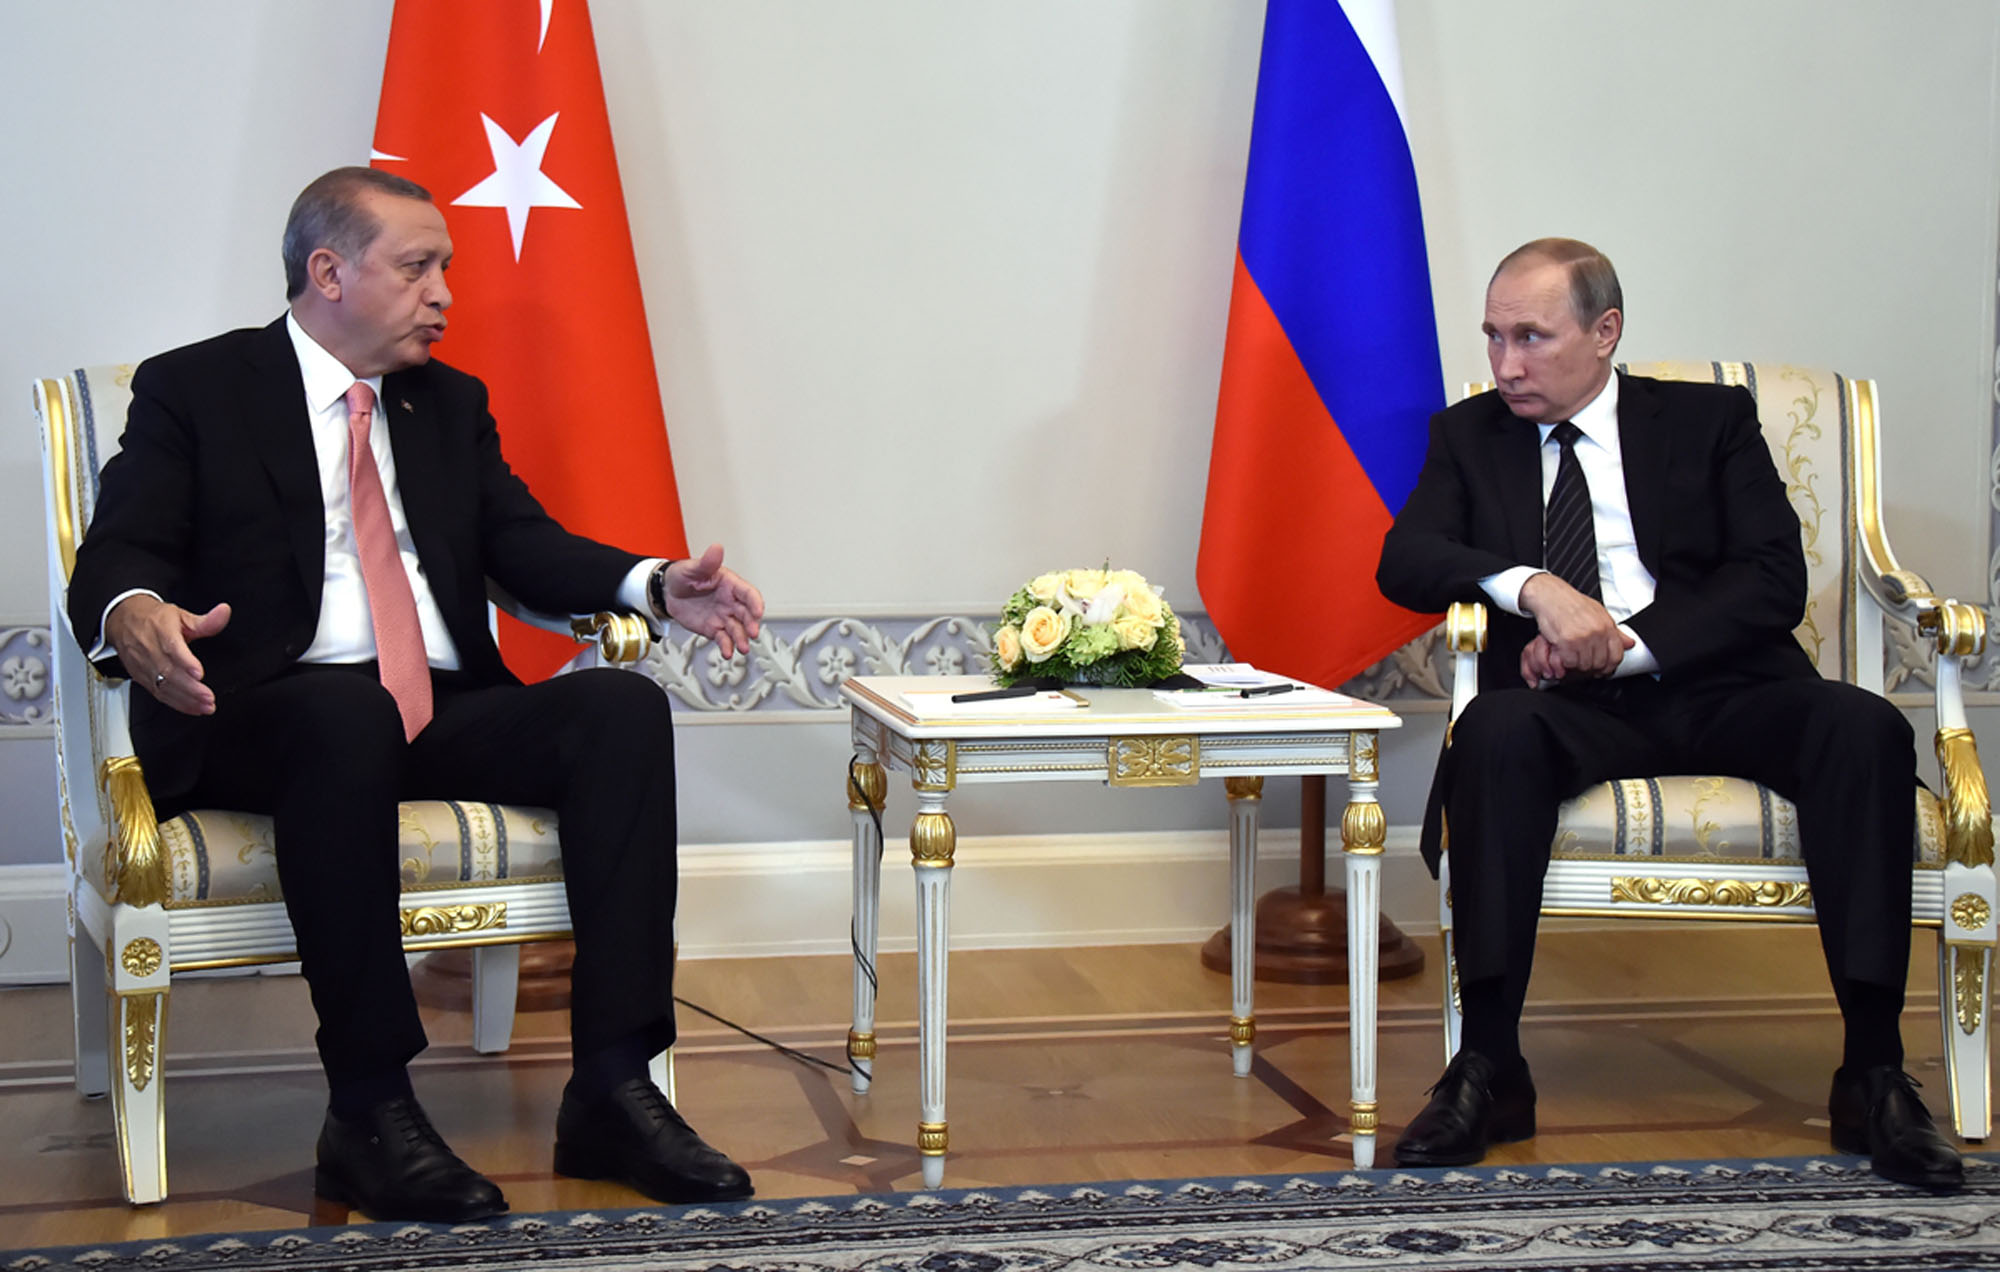 Erdogan Rekindles Russian Ties as Putin Eyes Turkey Investment